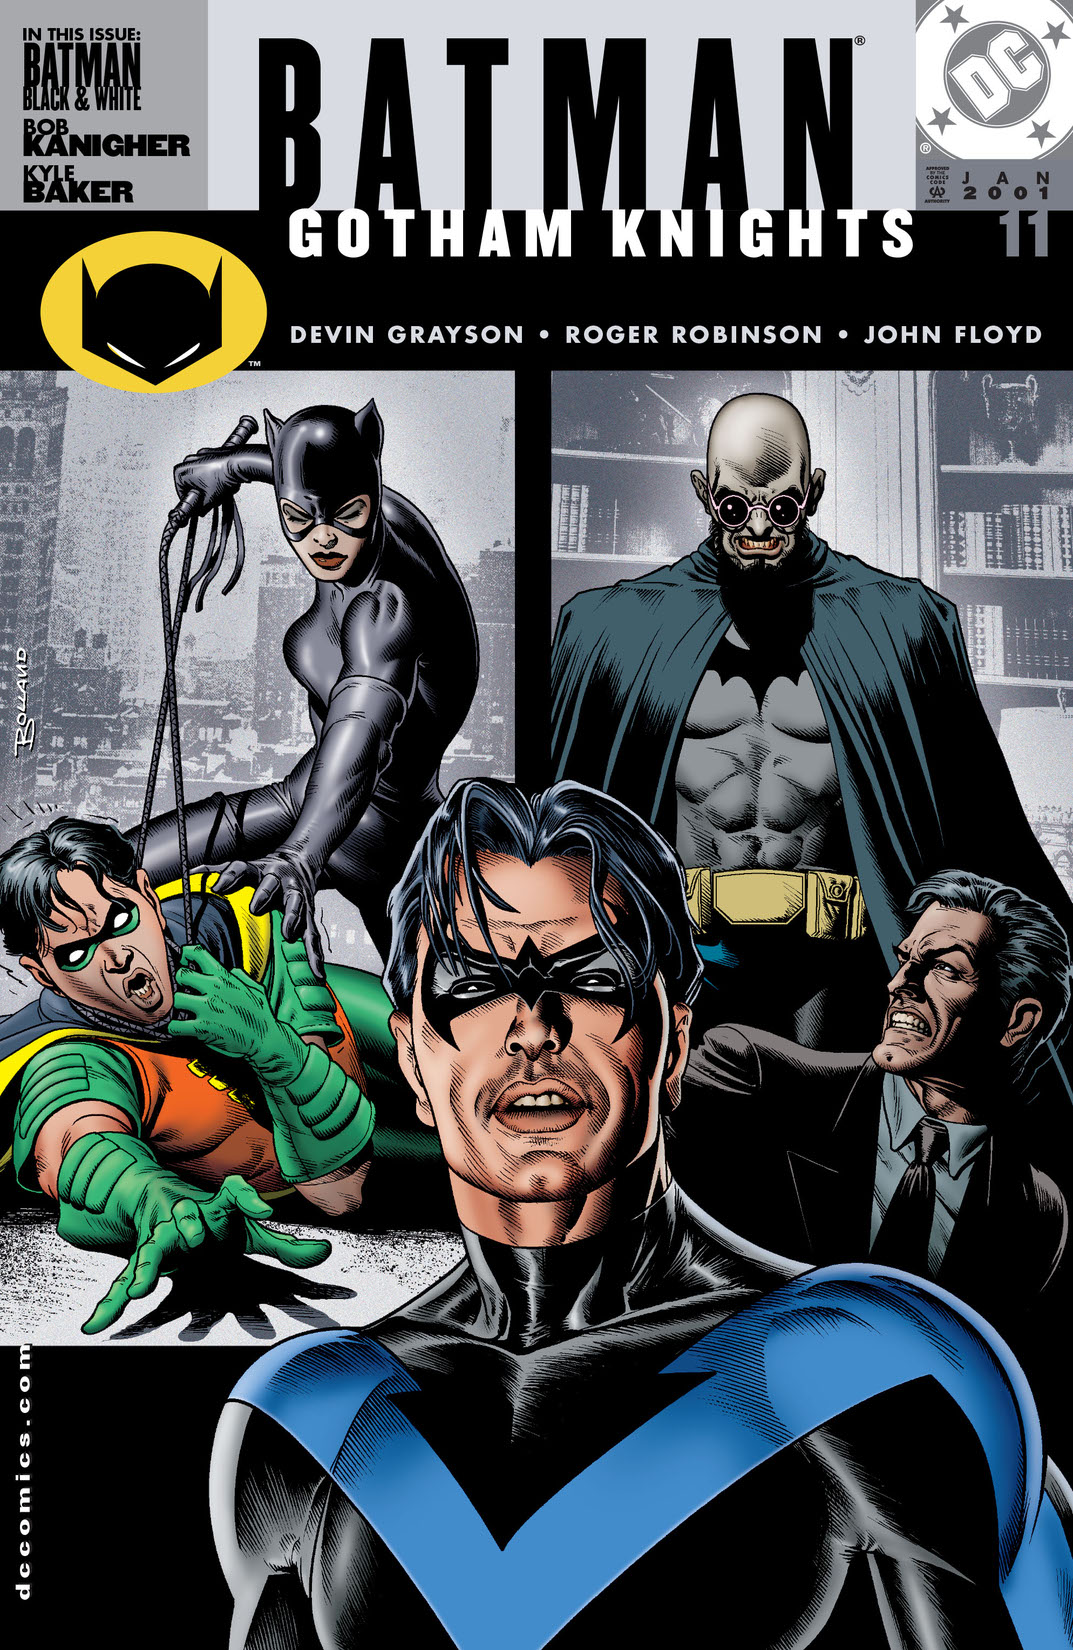 Batman: Gotham Knights #11 preview images